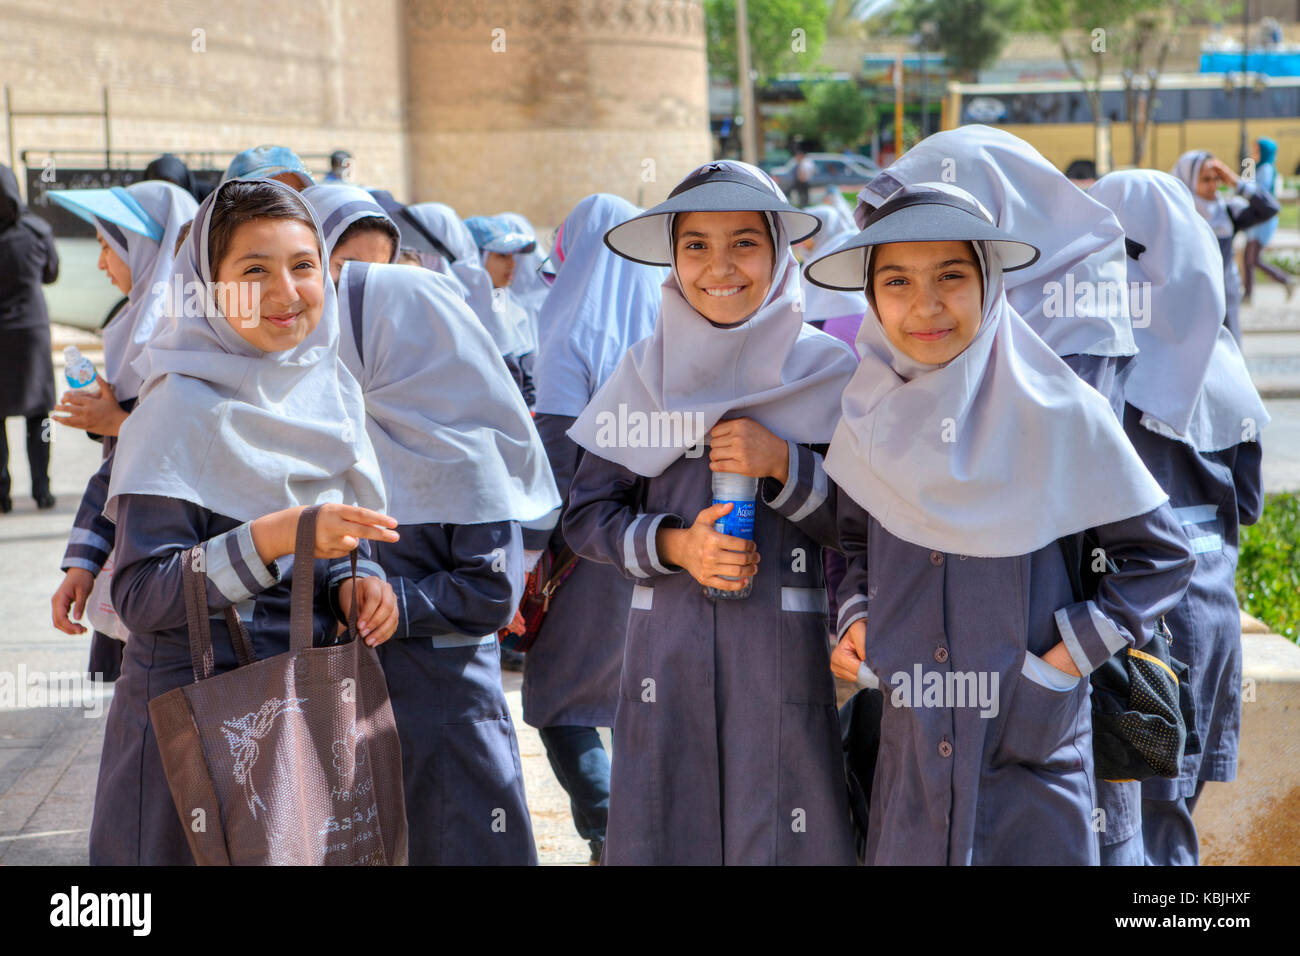 Fars Province, Shiraz, Iran - 19 april, 2017: Portrait of three Iranian schoolgirls in school uniform with a hijab and head visor. Stock Photo